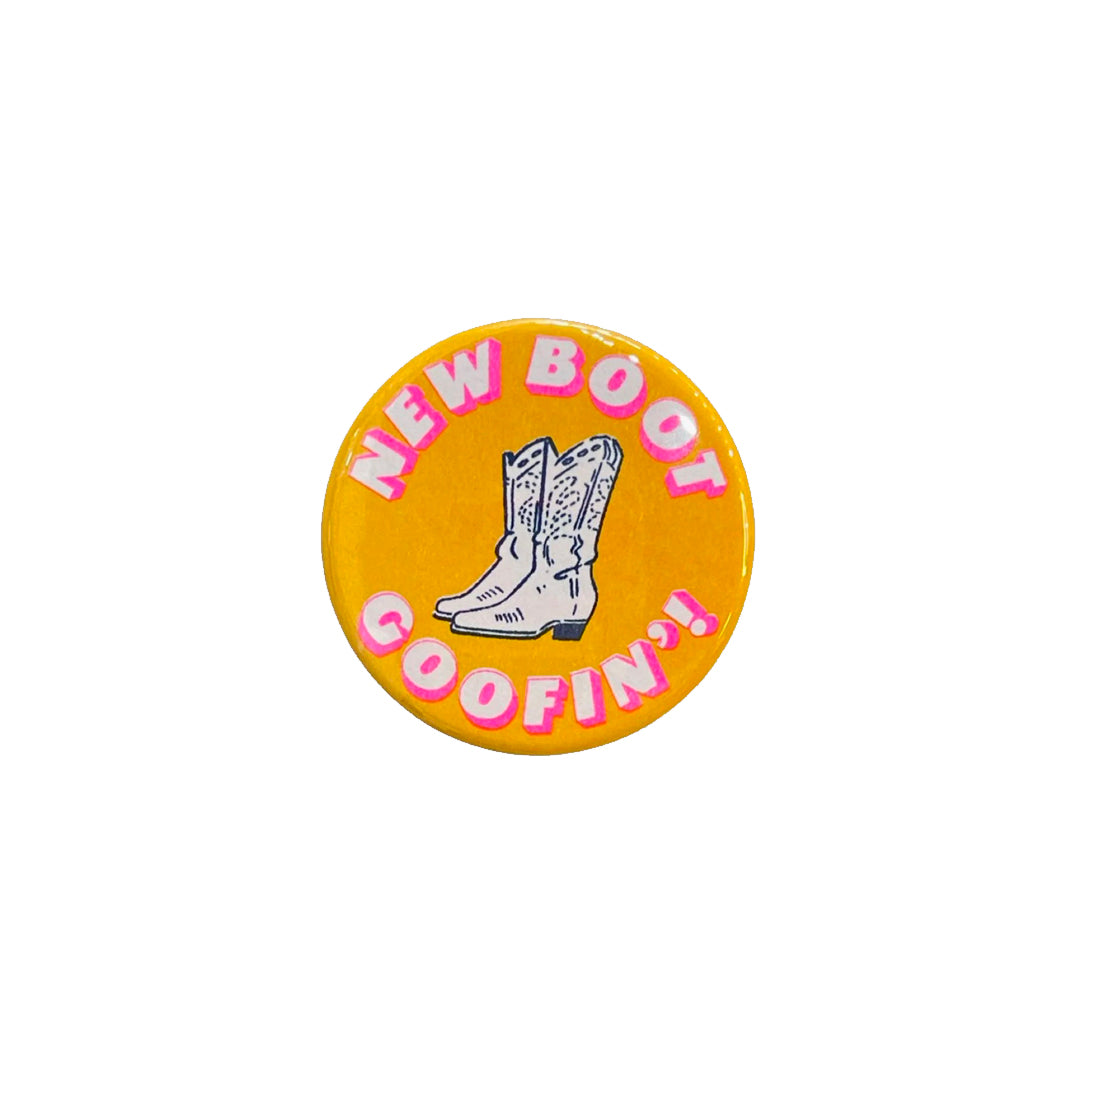 New Boot Goofin' 1¾" Button